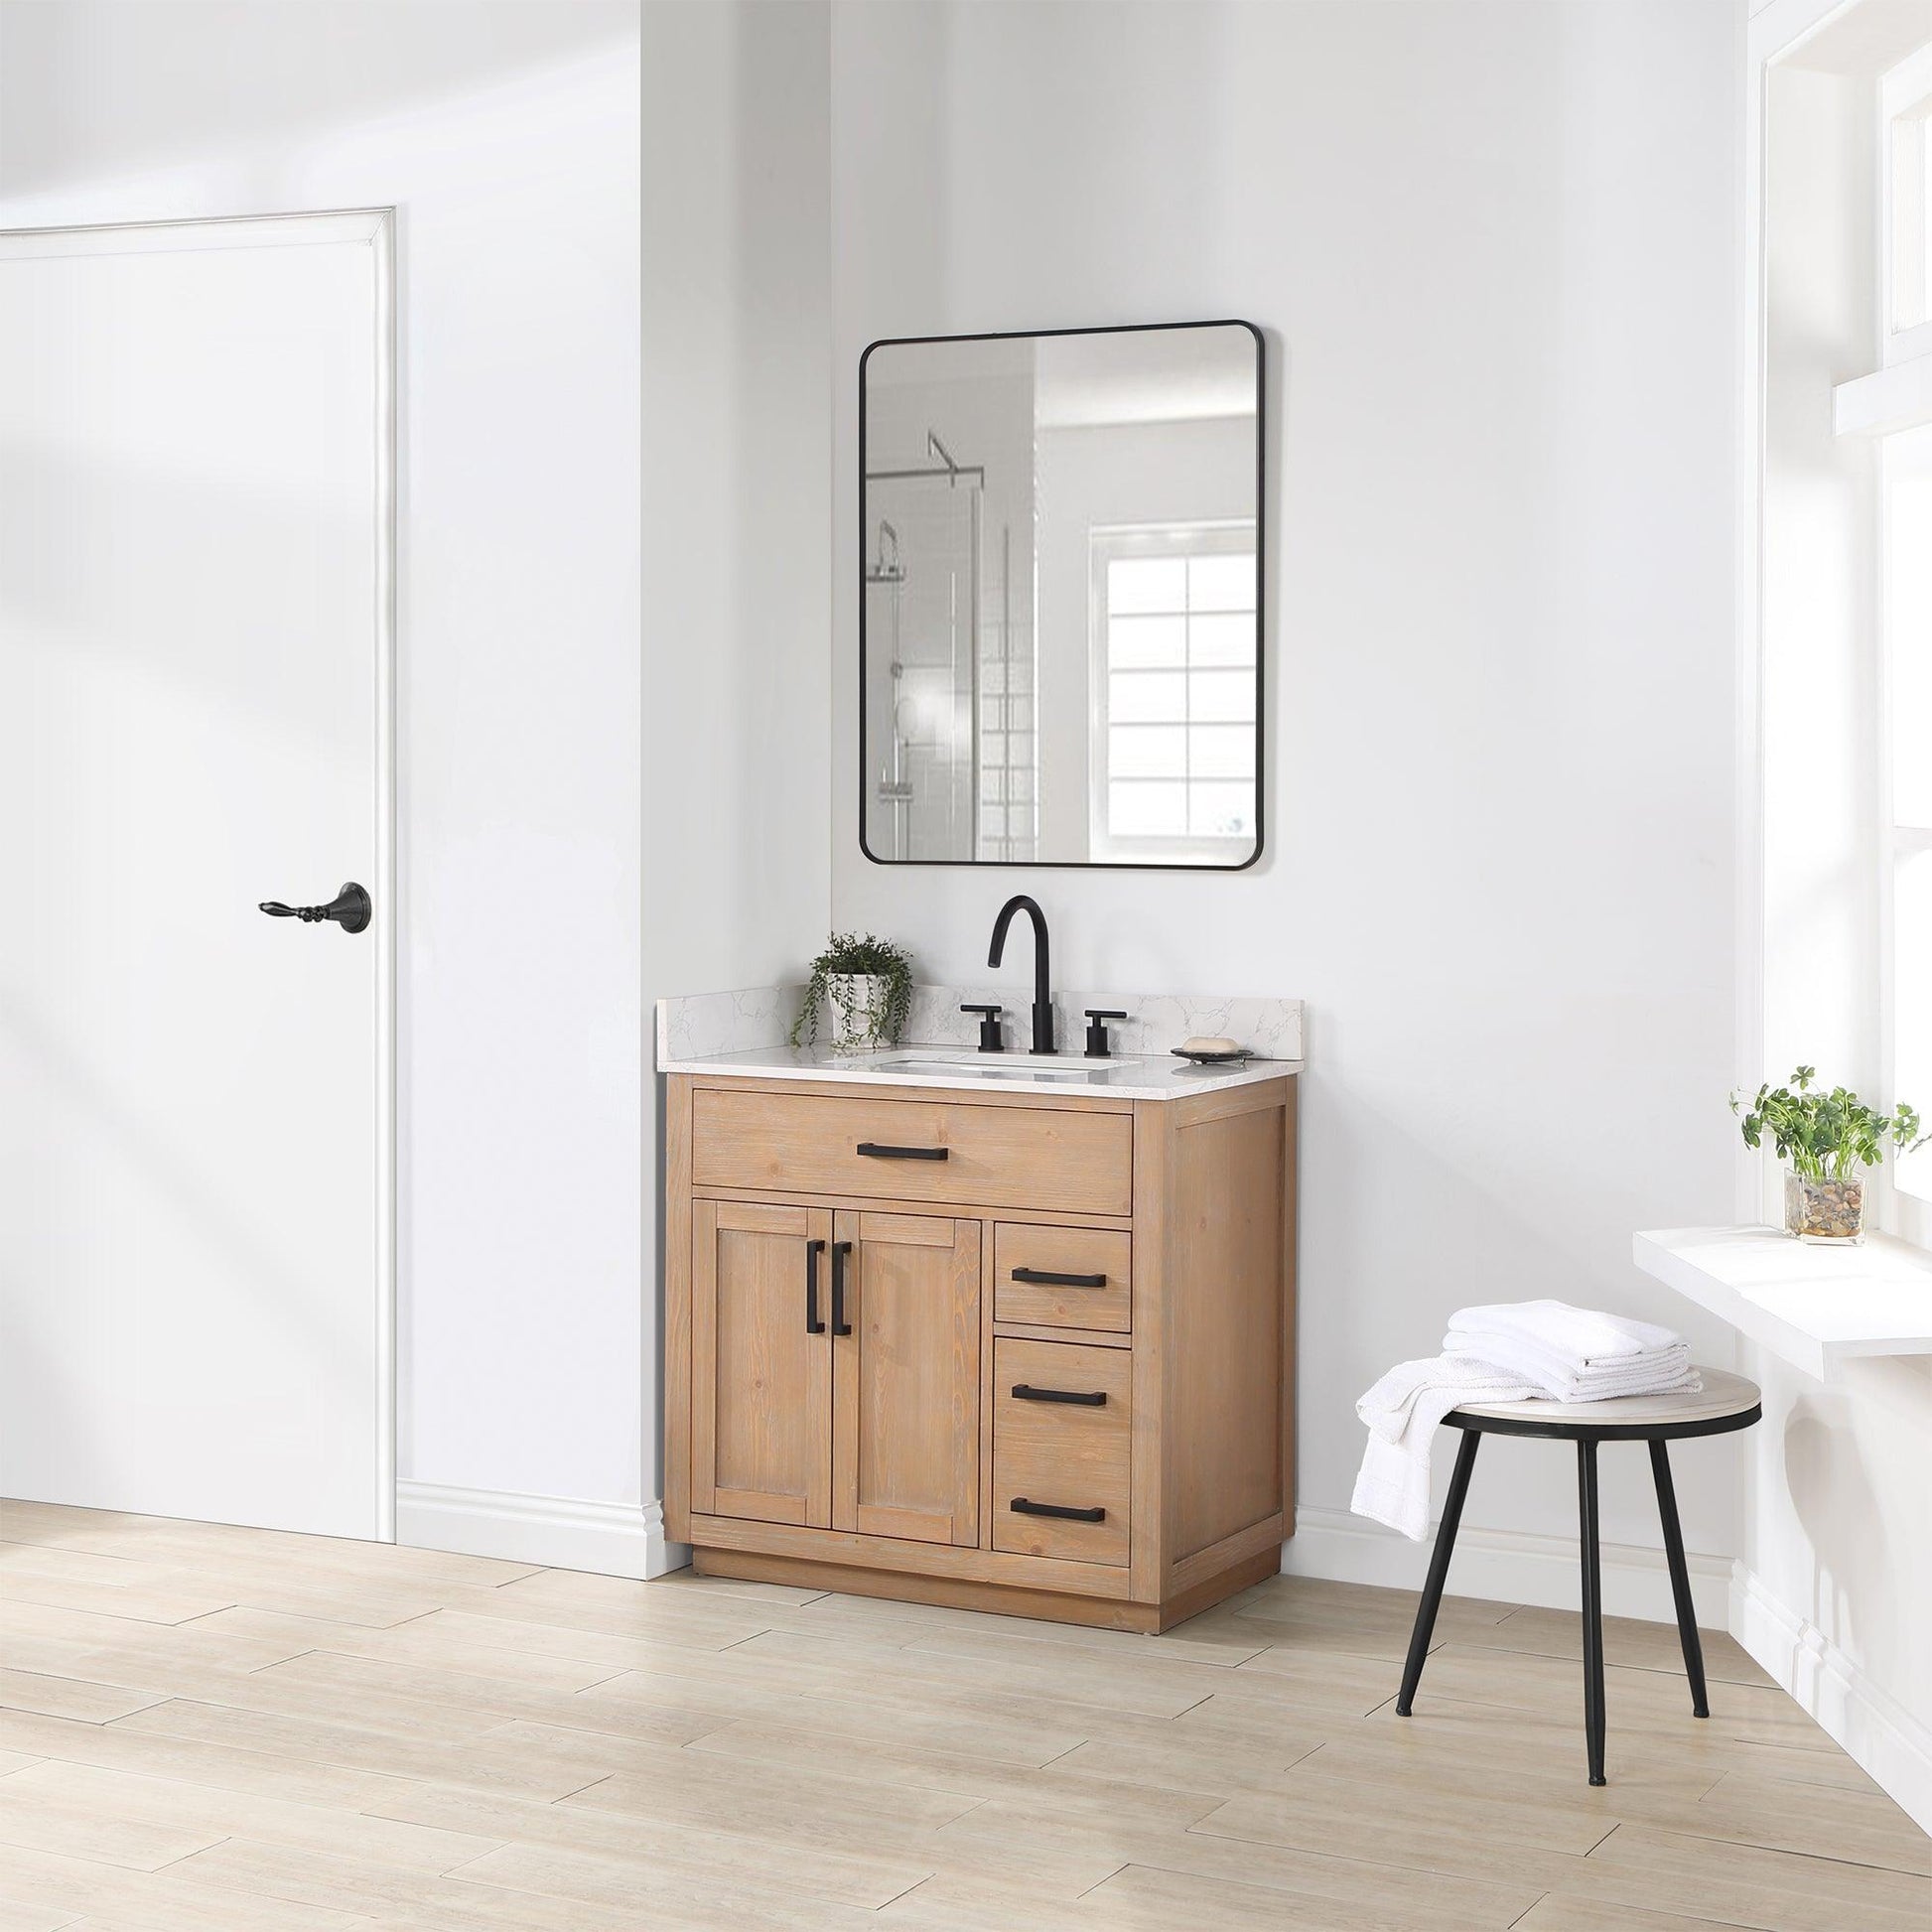 Altair Gavino Single Bathroom Vanity with Grain White Composite Stone Countertop and Optional Mirror - Sea & Stone Bath